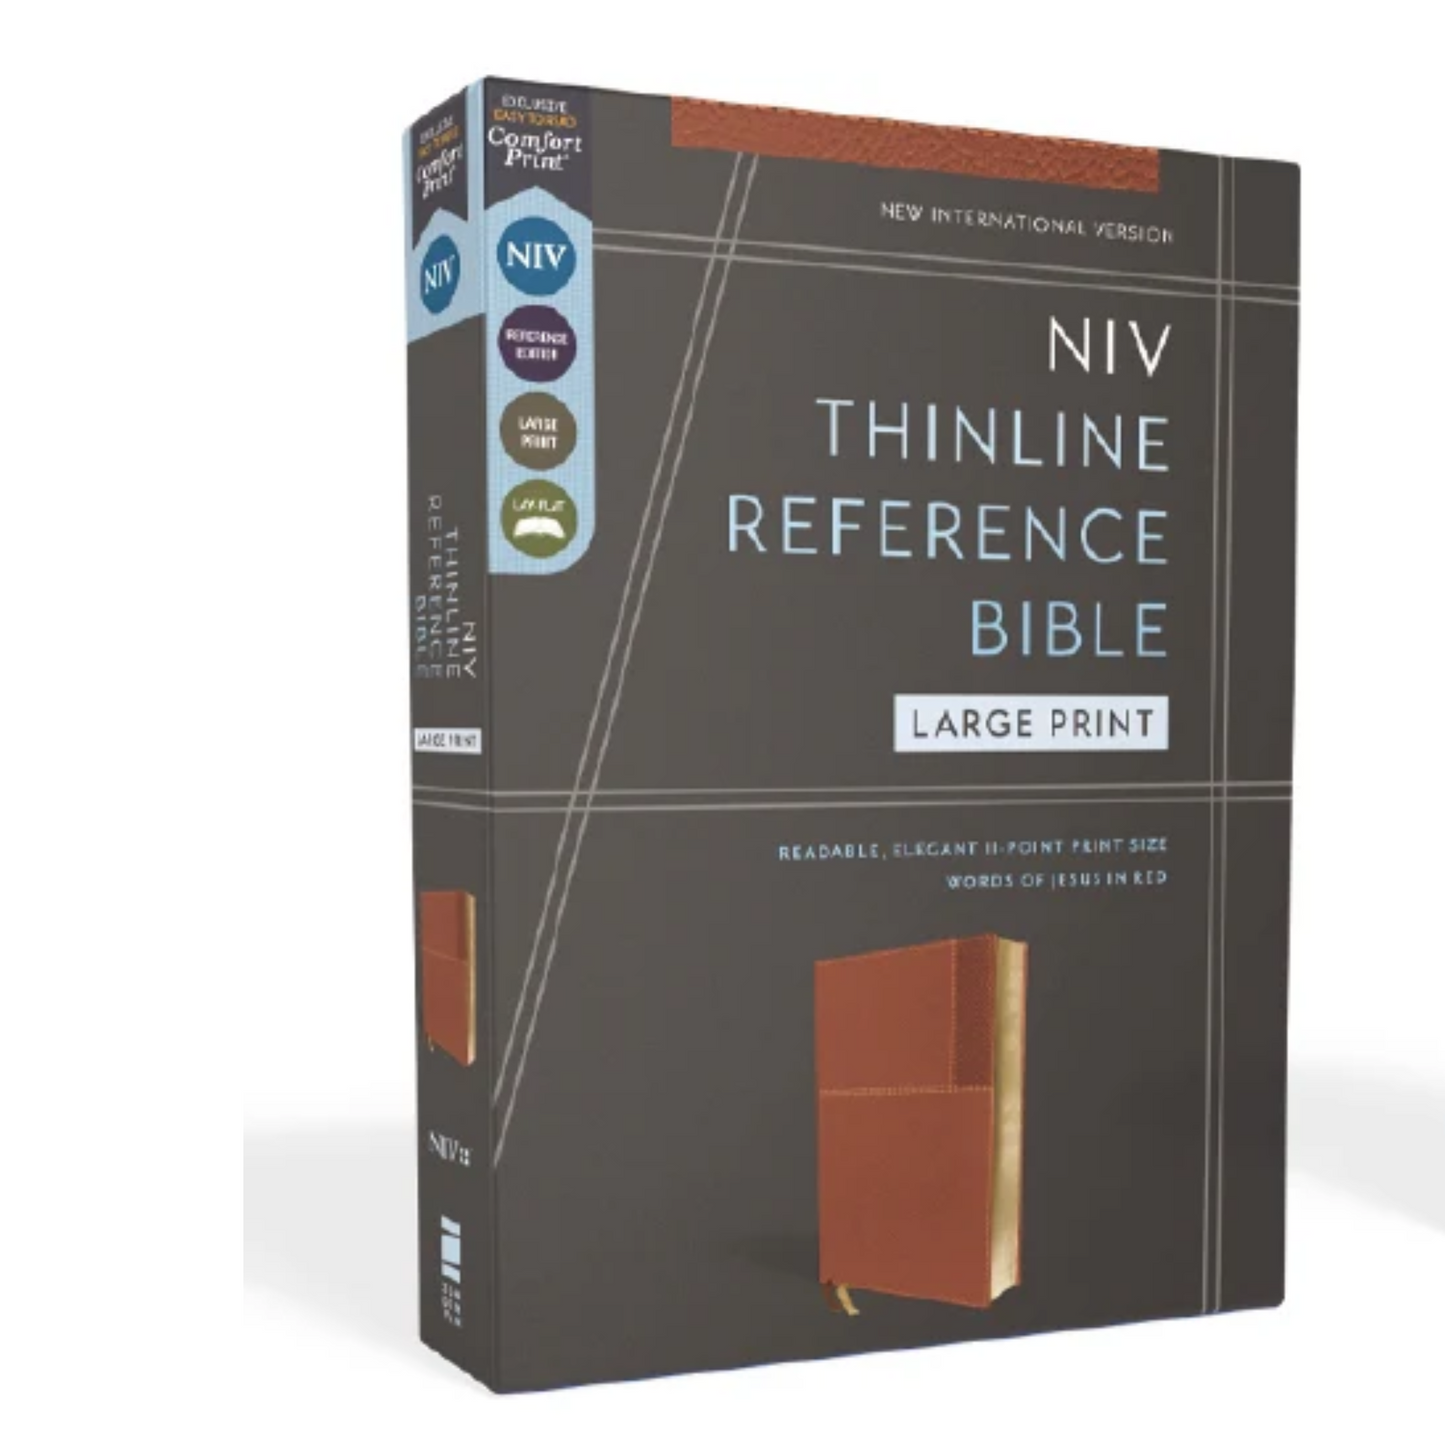 NIV Thinline Reference, Large Print